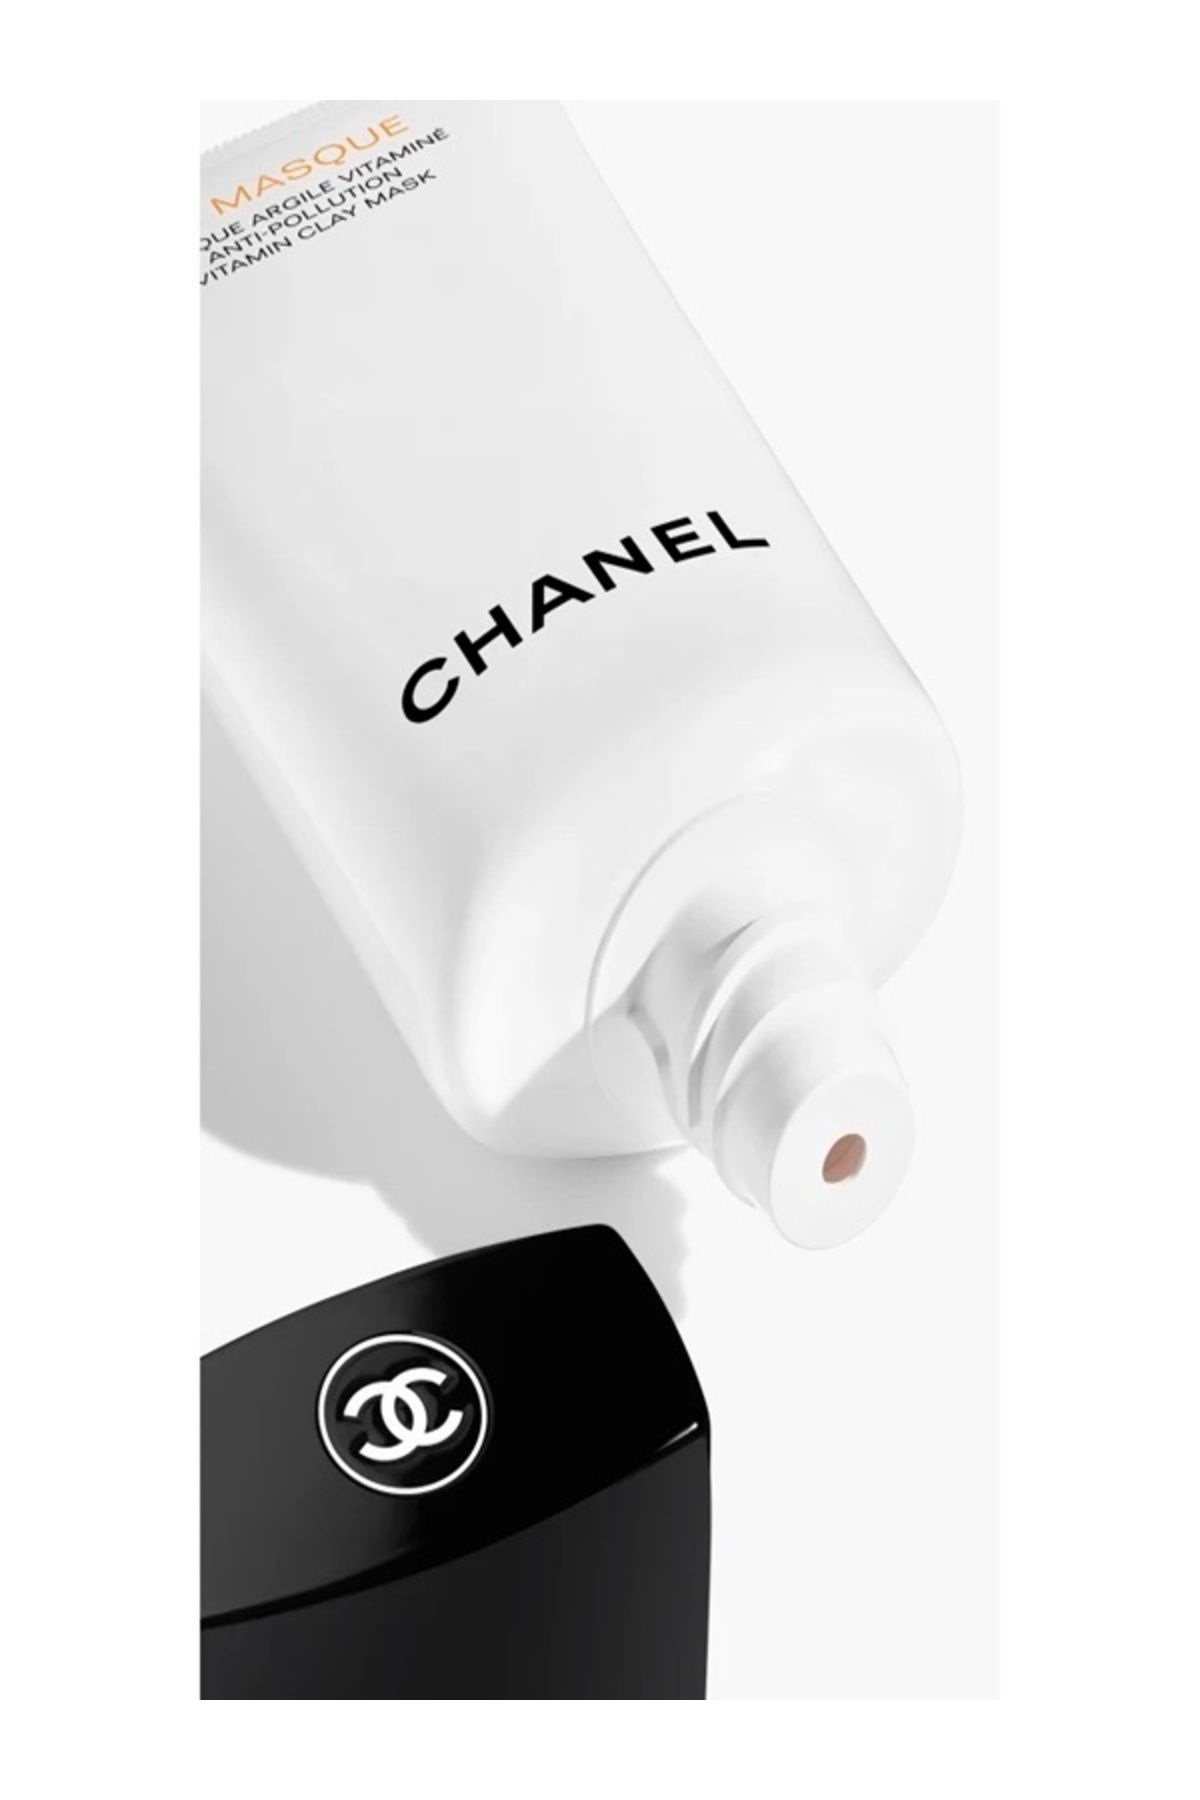 Chanel ماسک ضد آلودگی پوست LE MASQUE حاوی ویتامین E و خاک رس 75میل